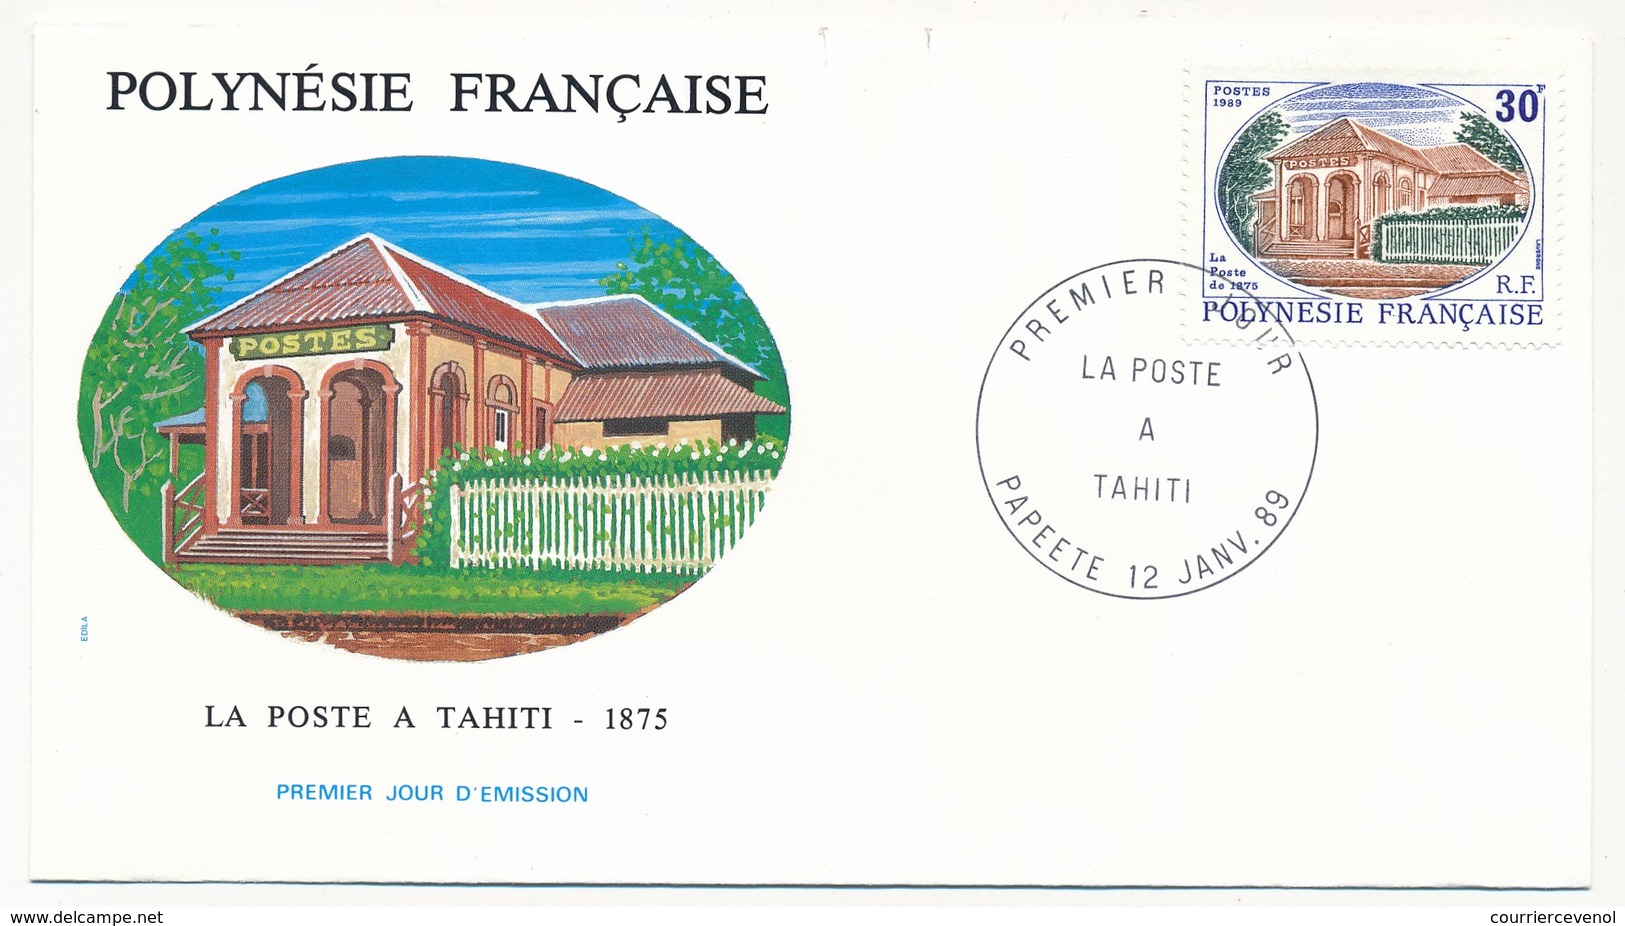 POLYNESIE FRANCAISE - 2 FDC - La Poste à Tahiti - 12 Janvier 1989 - Papeete - FDC